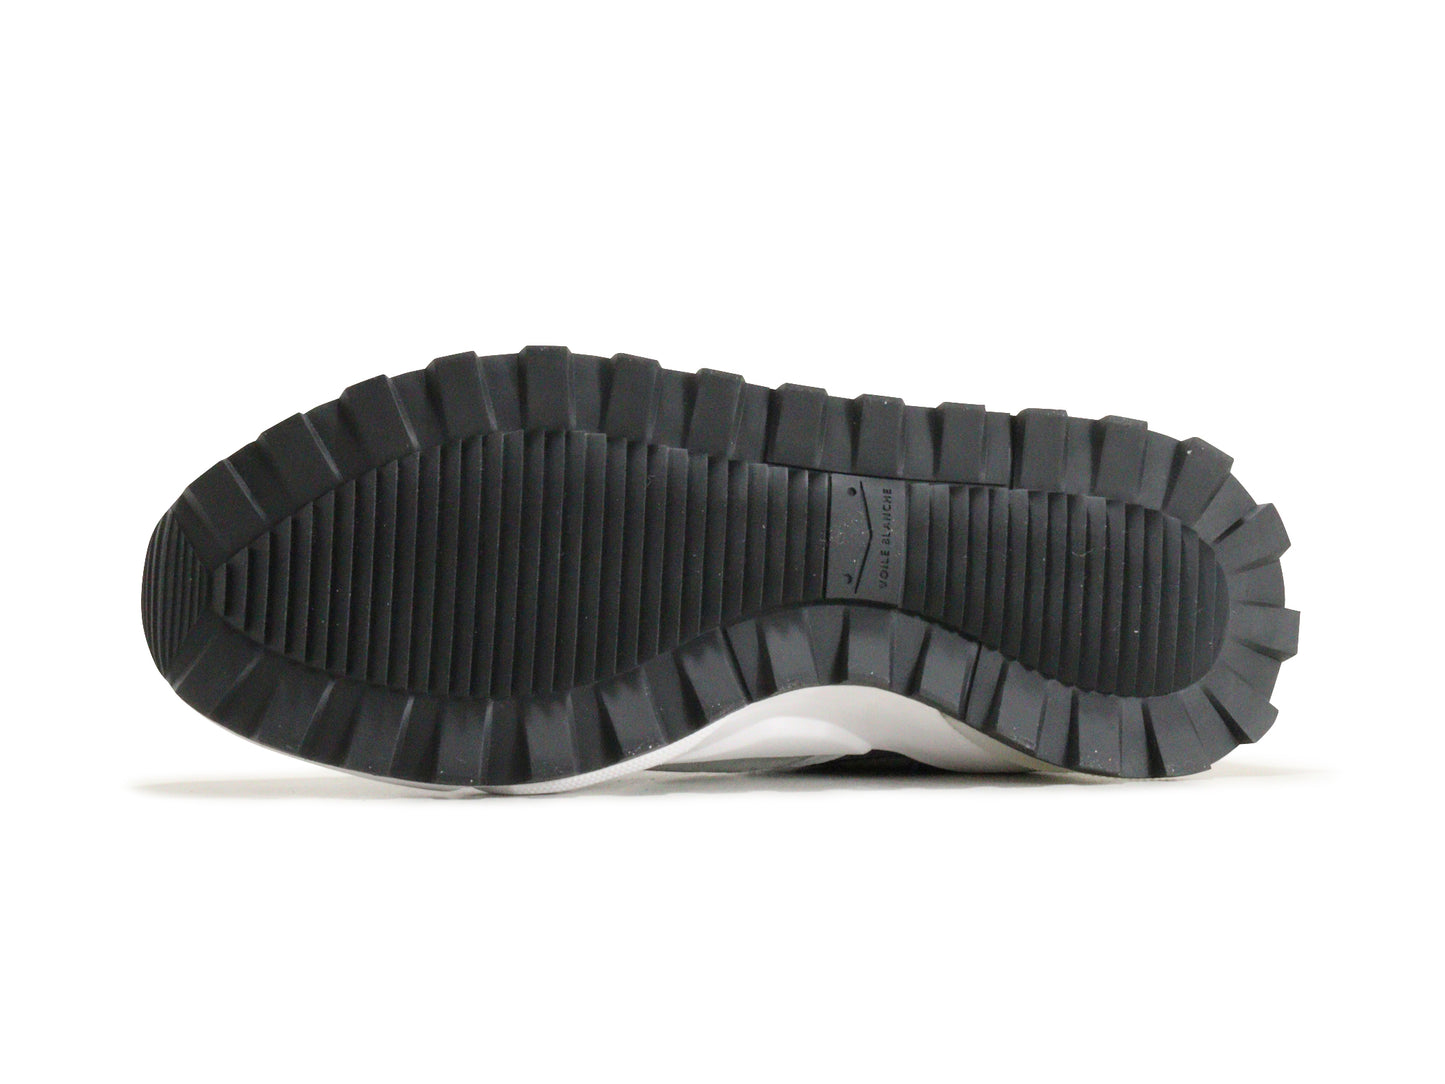 Voile Blancheのスニーカー「01/1b35」の靴底の商品画像